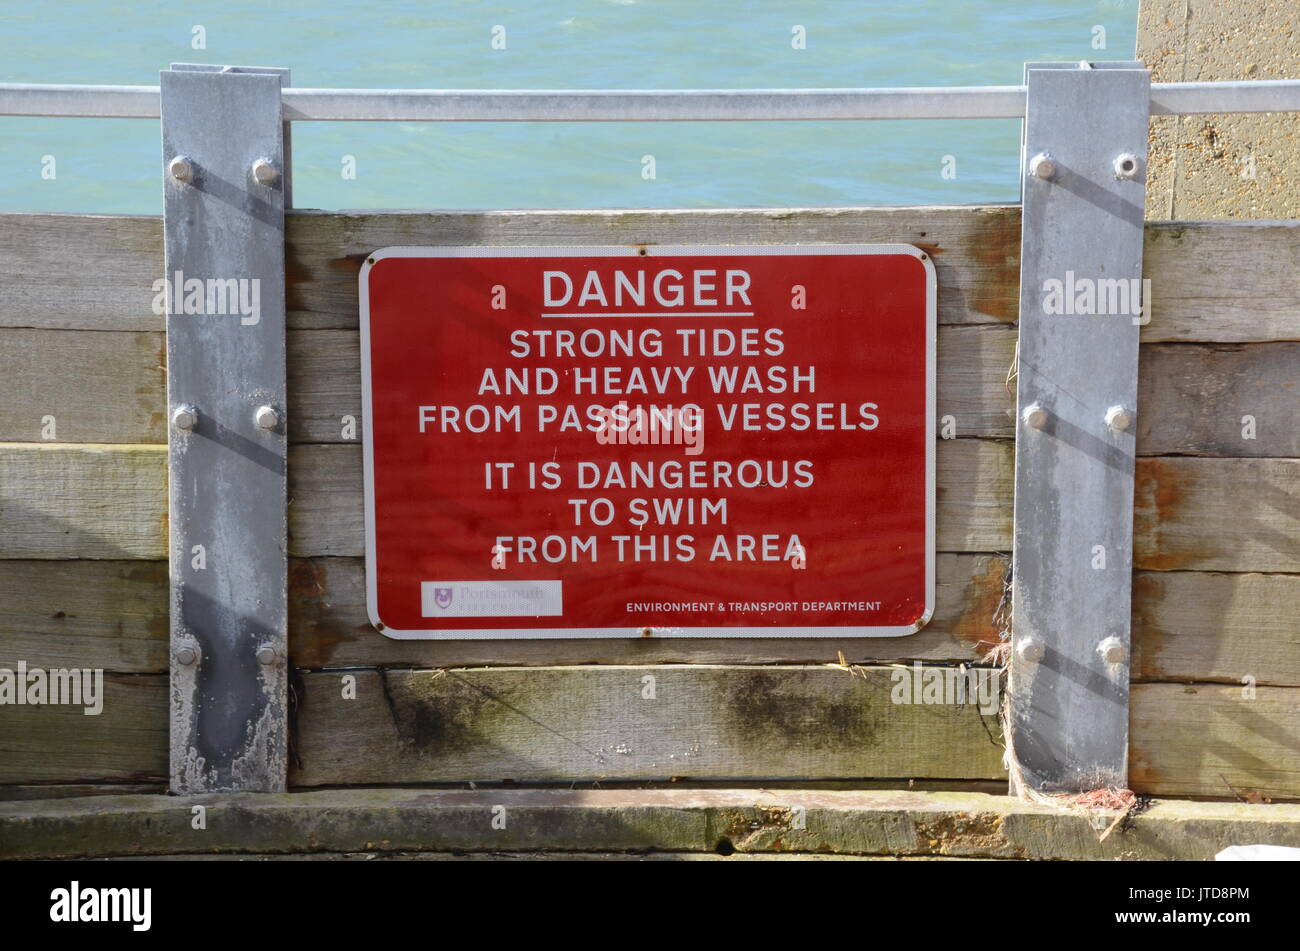 risk of flooding, flood warning sign Stock Photo